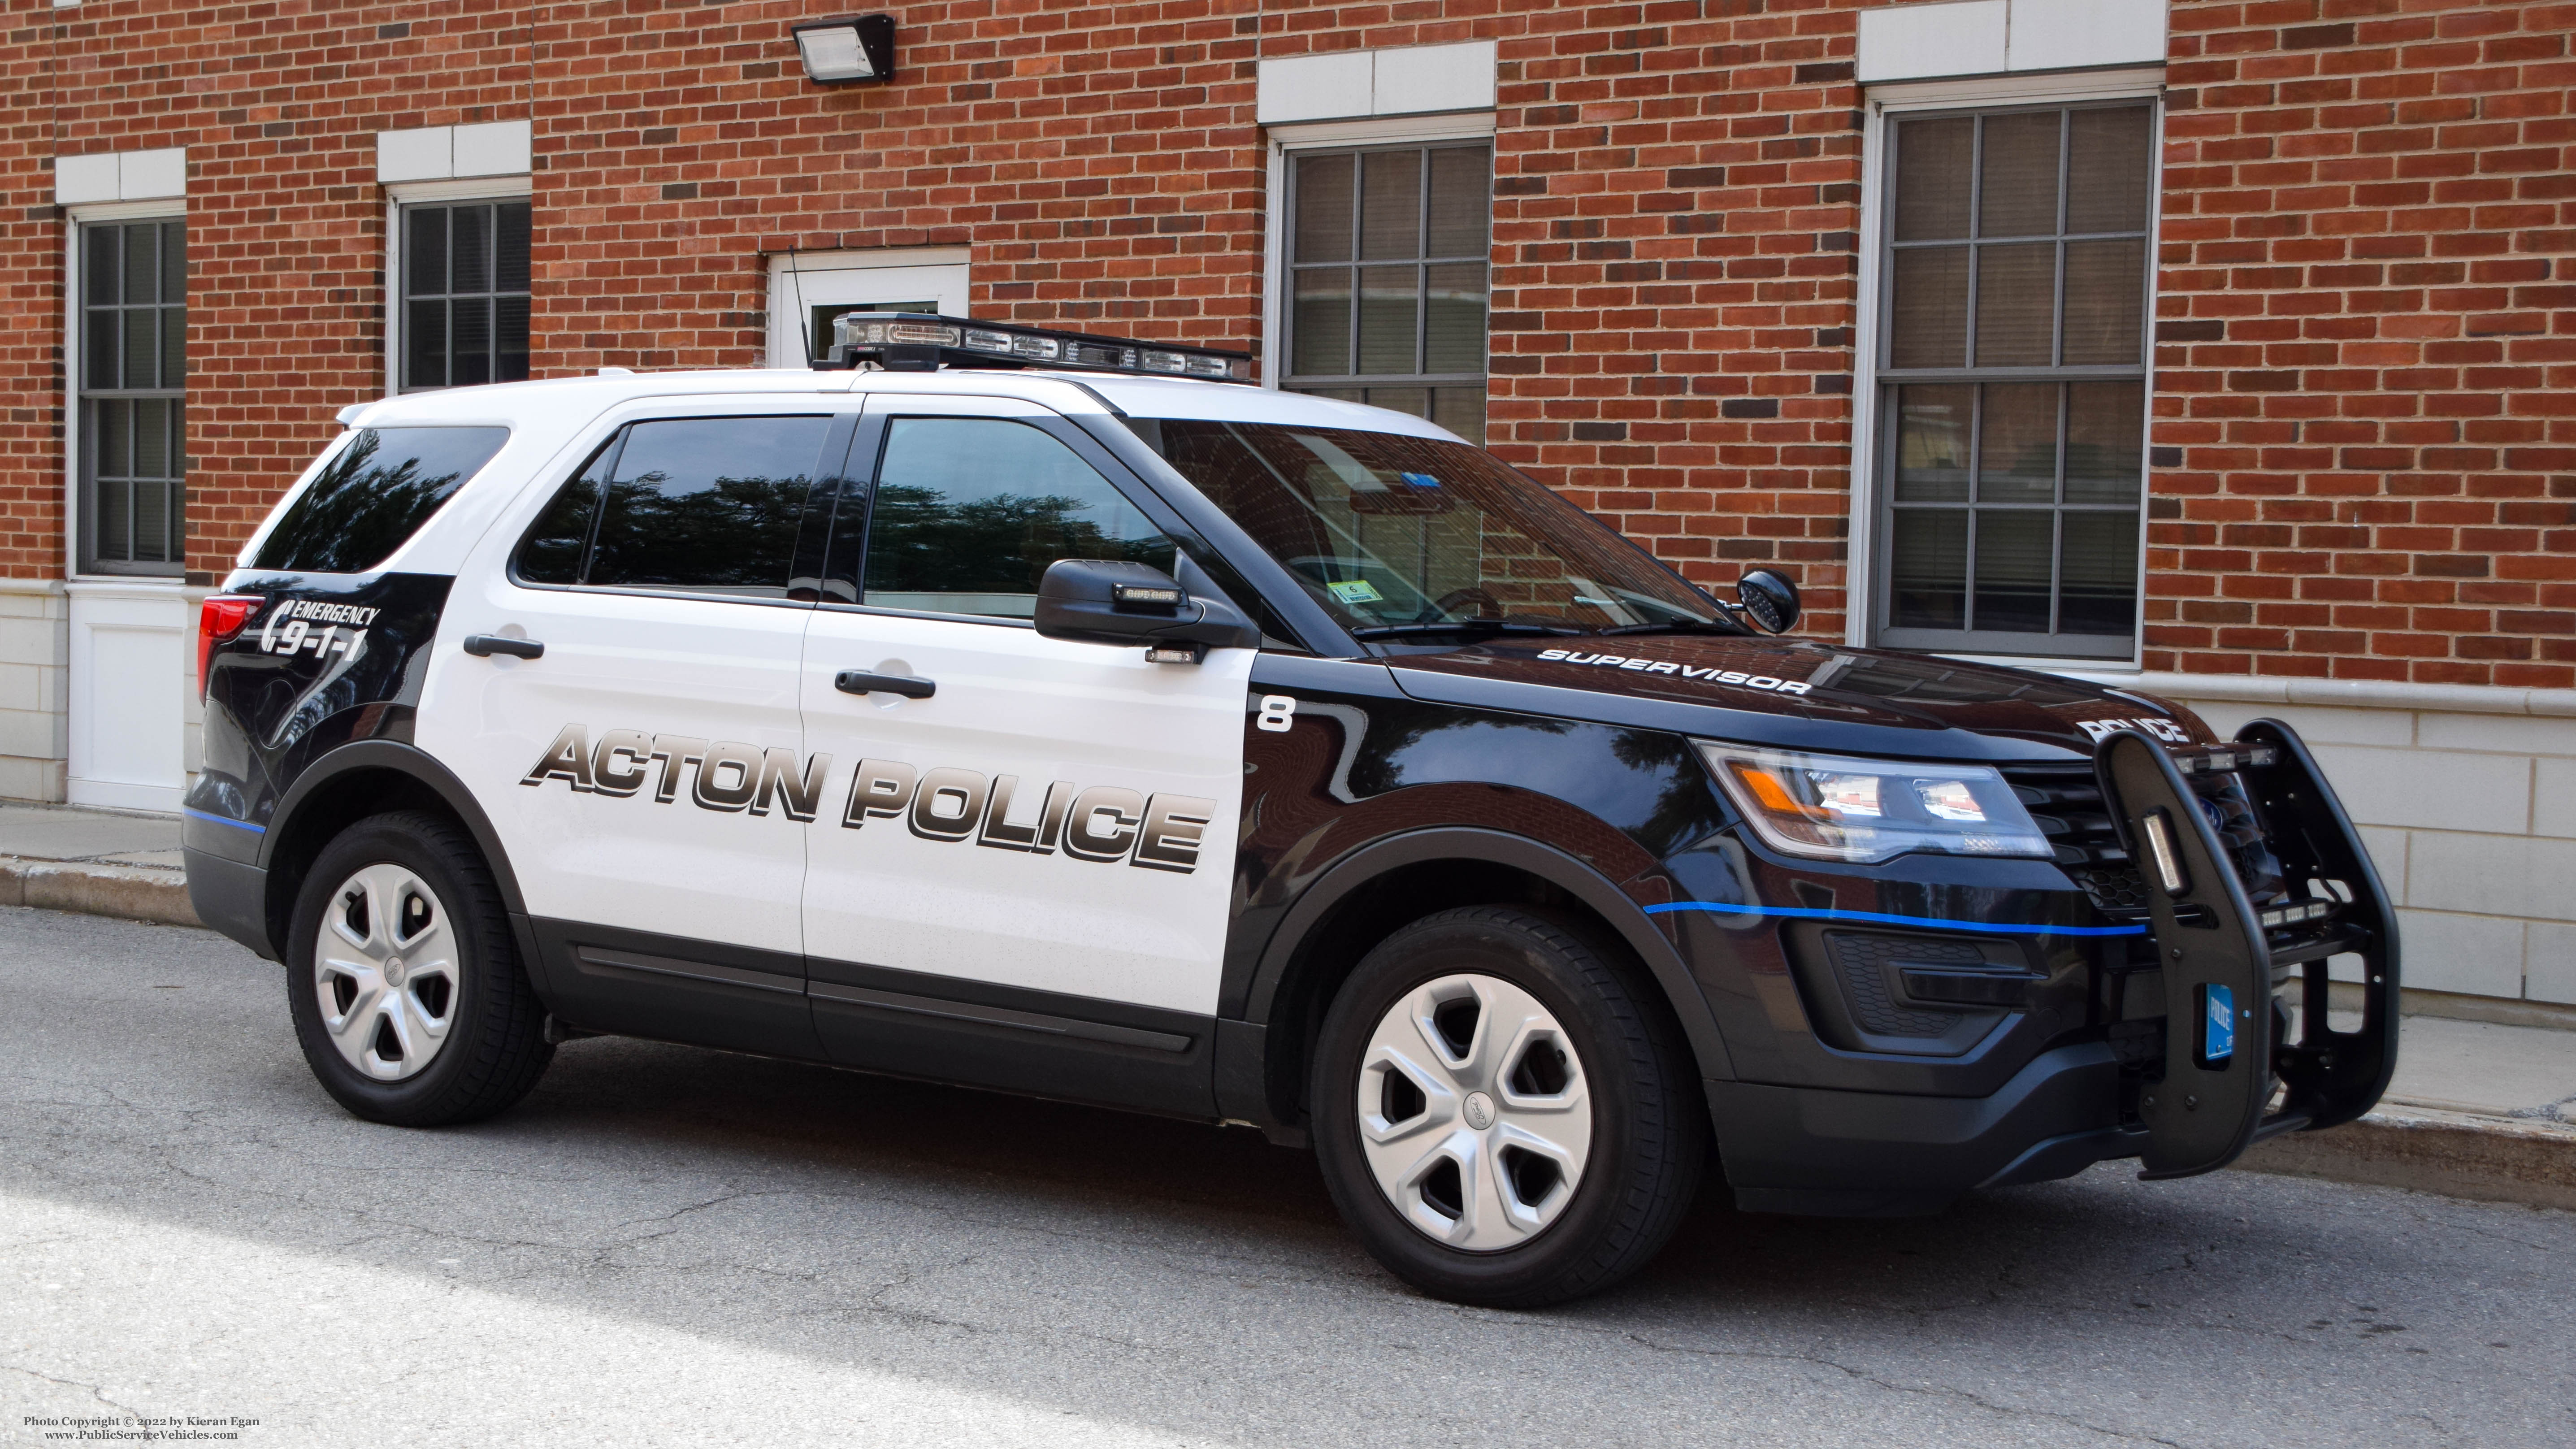 A photo  of Acton Police
            Car 8, a 2016-2019 Ford Police Interceptor Utility             taken by Kieran Egan